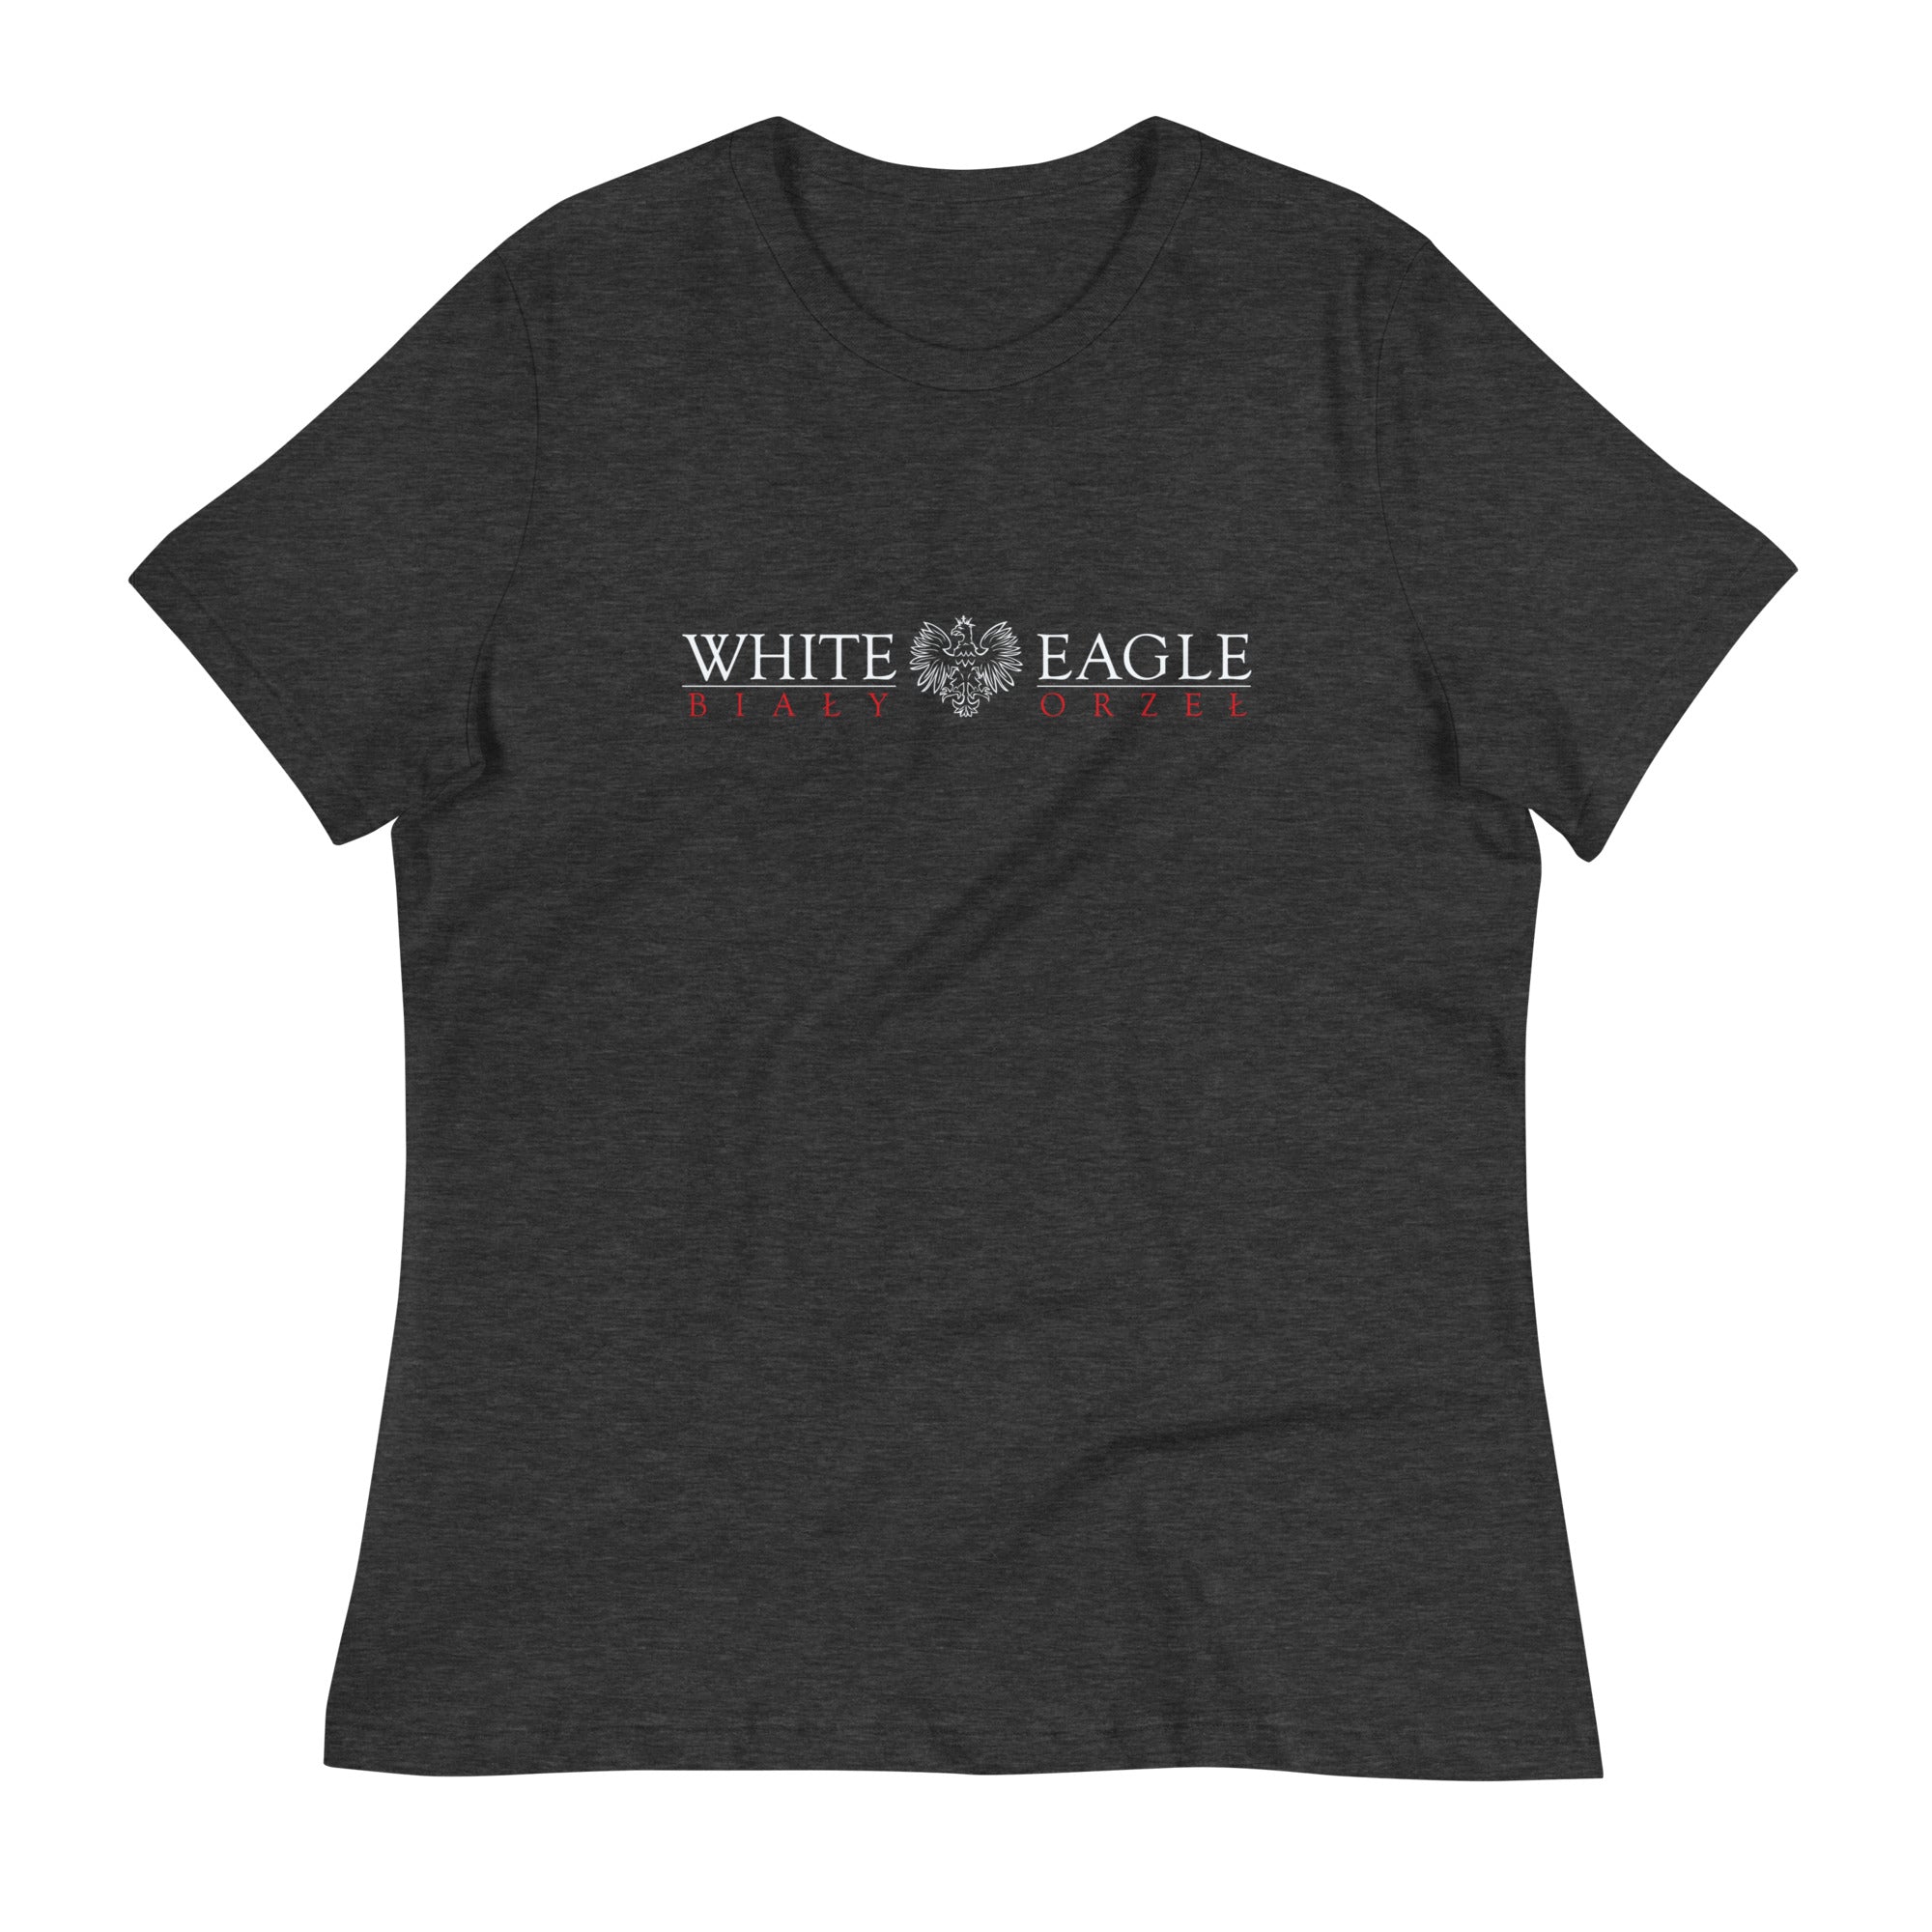 Bialy Orzel White Eagle Women's Short Sleeve Tshirt